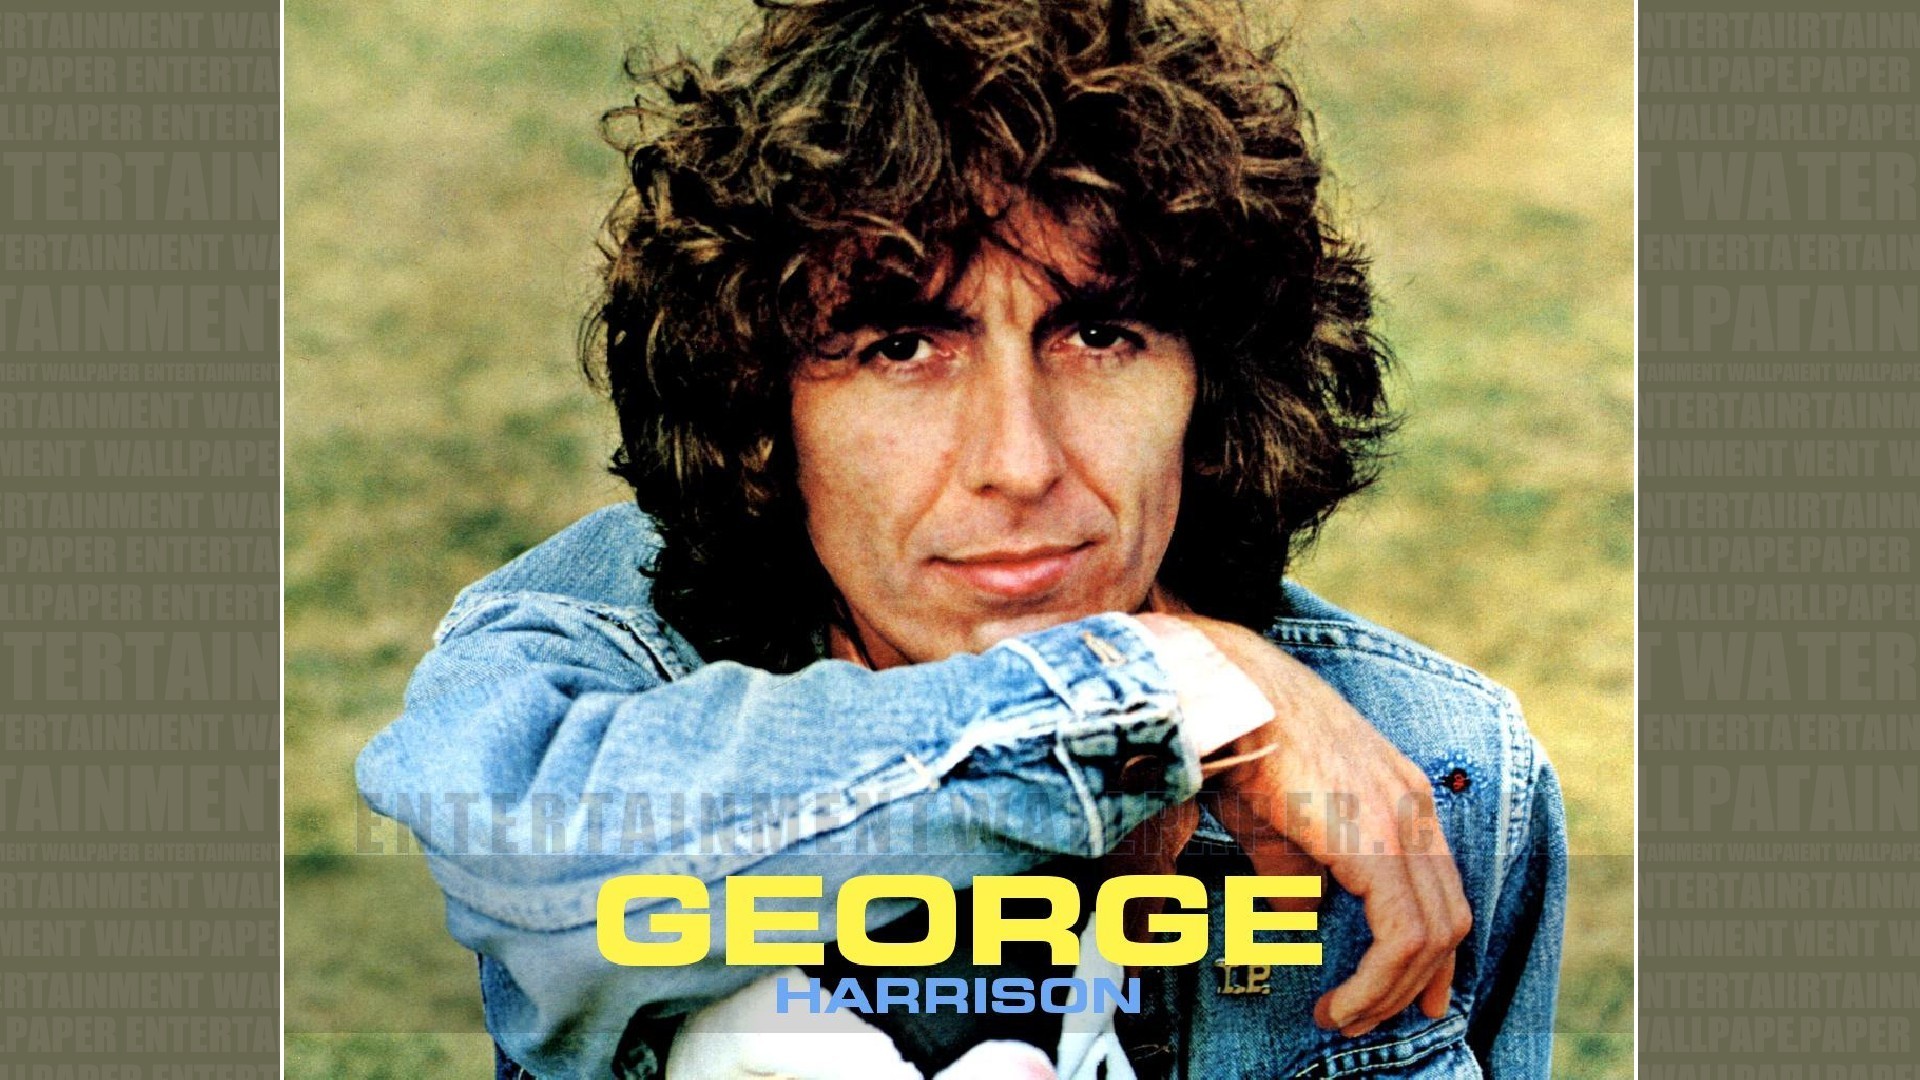 1920x1080 George Harrison Wallpaper - Original size, download now.